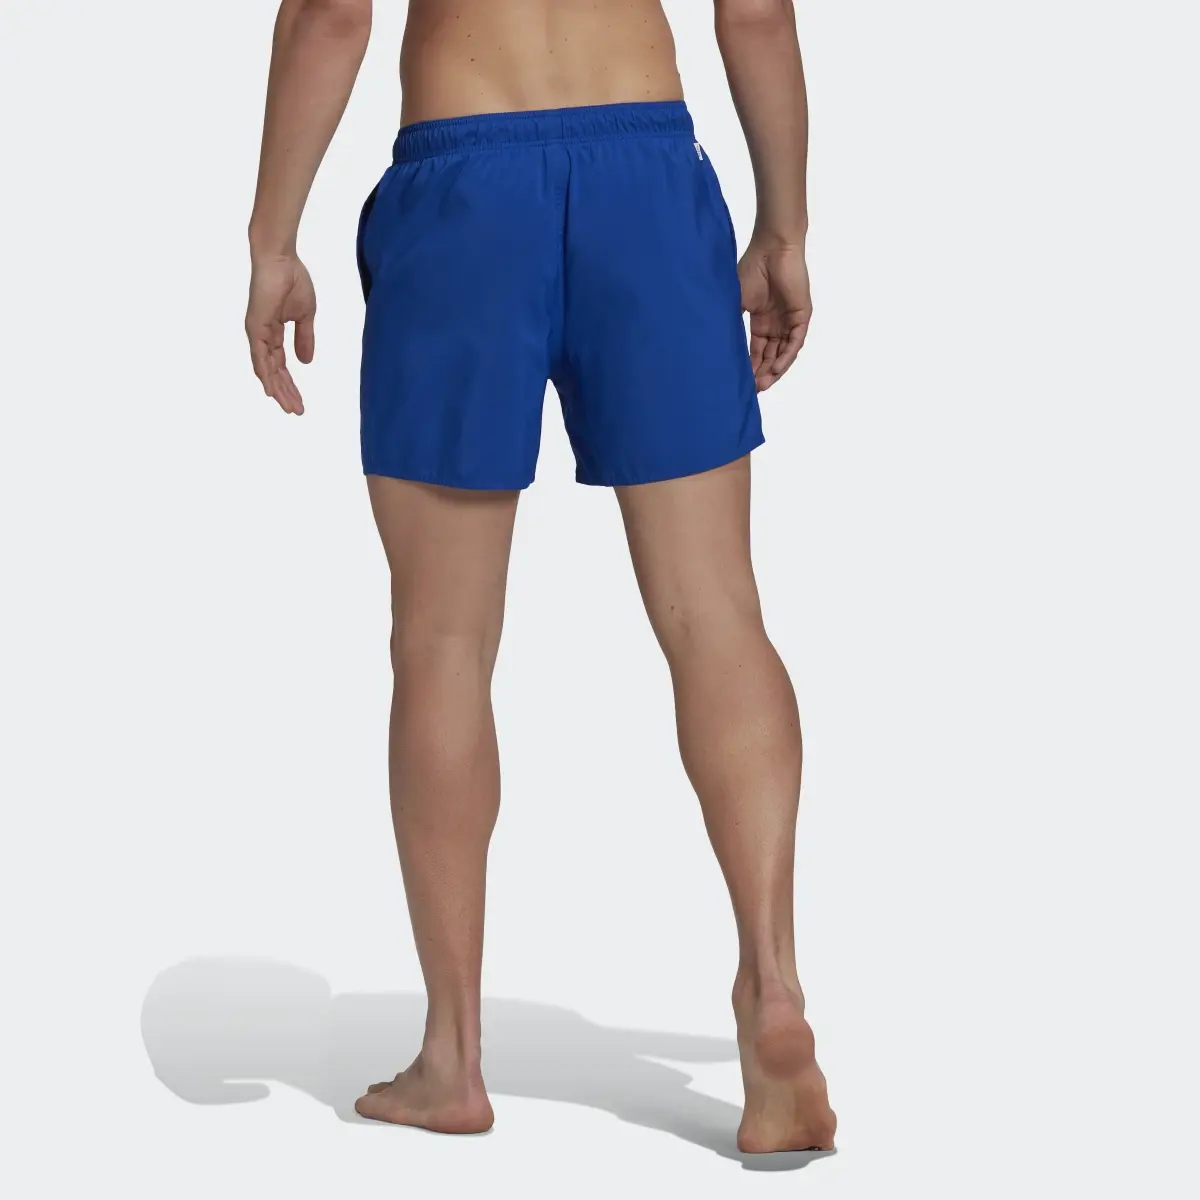 Adidas Short Length Solid Swim Shorts. 2